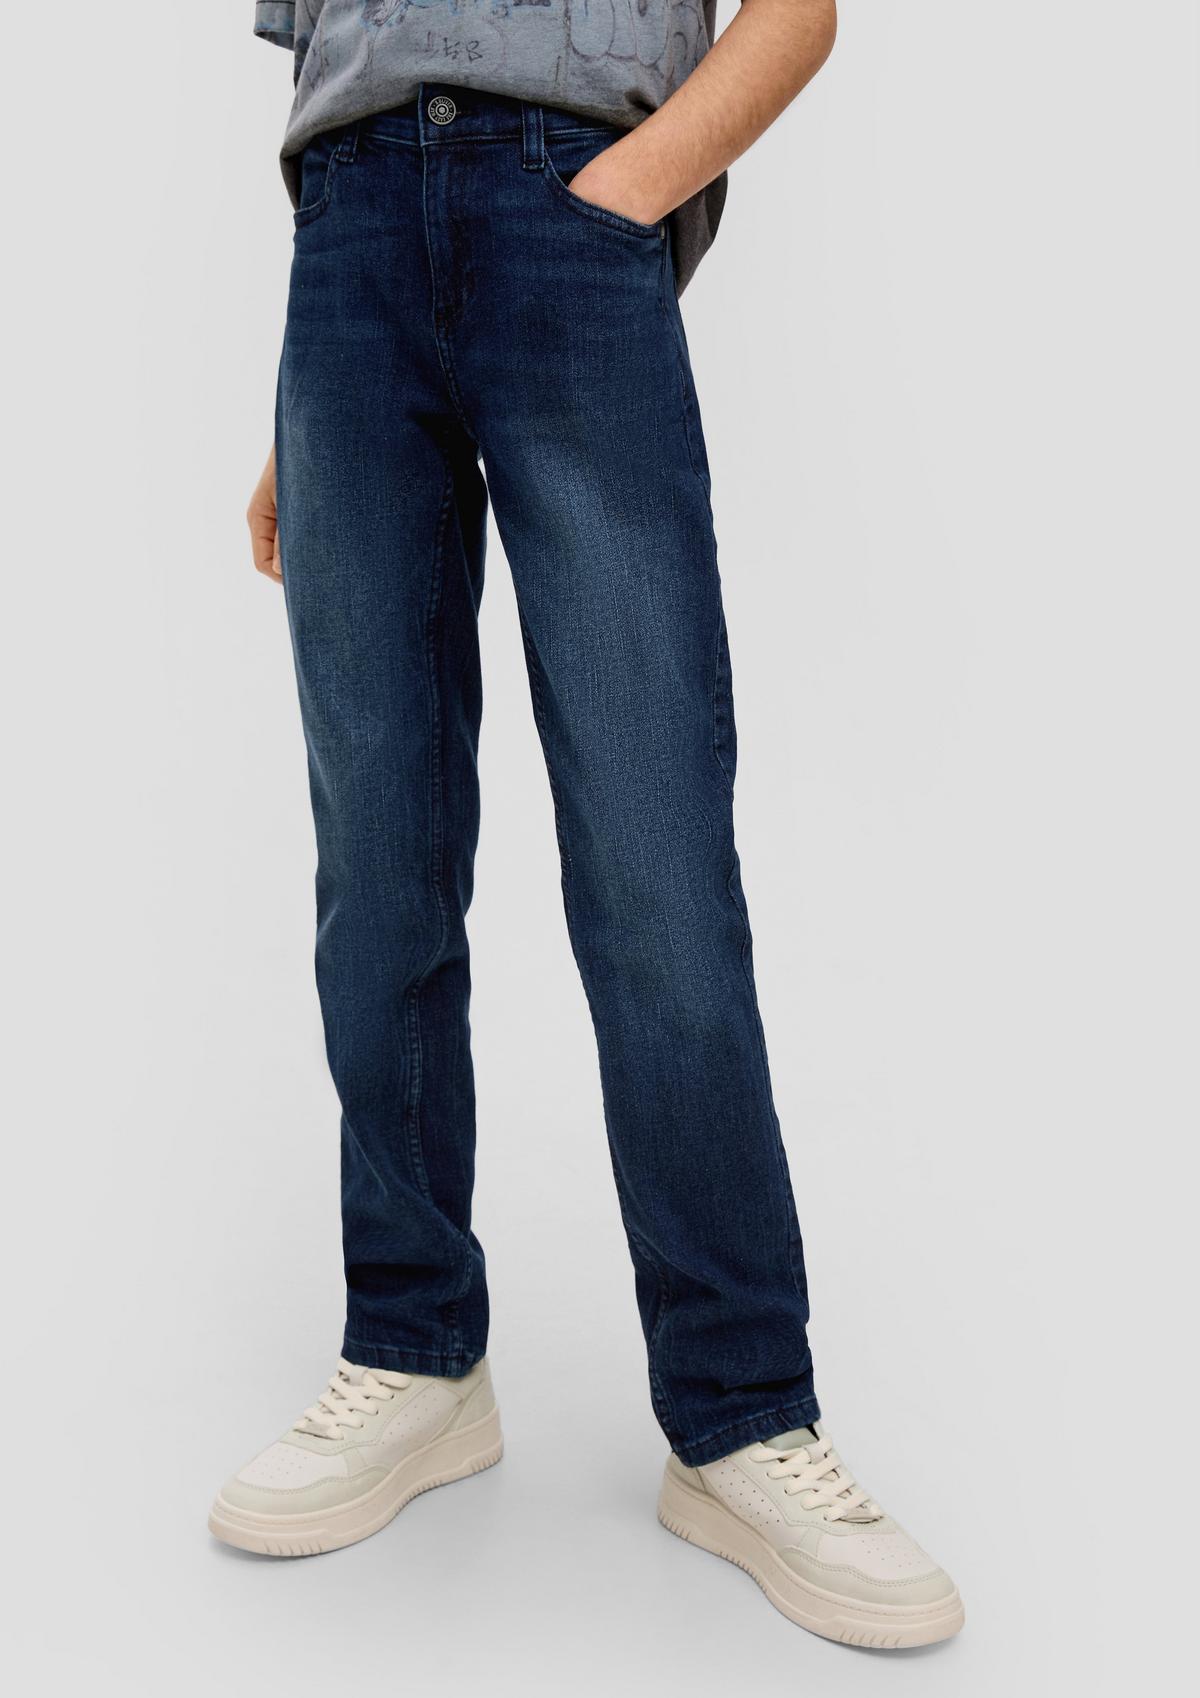 Jeans Seattle / Regular Fit / Mid Rise / Slm Leg